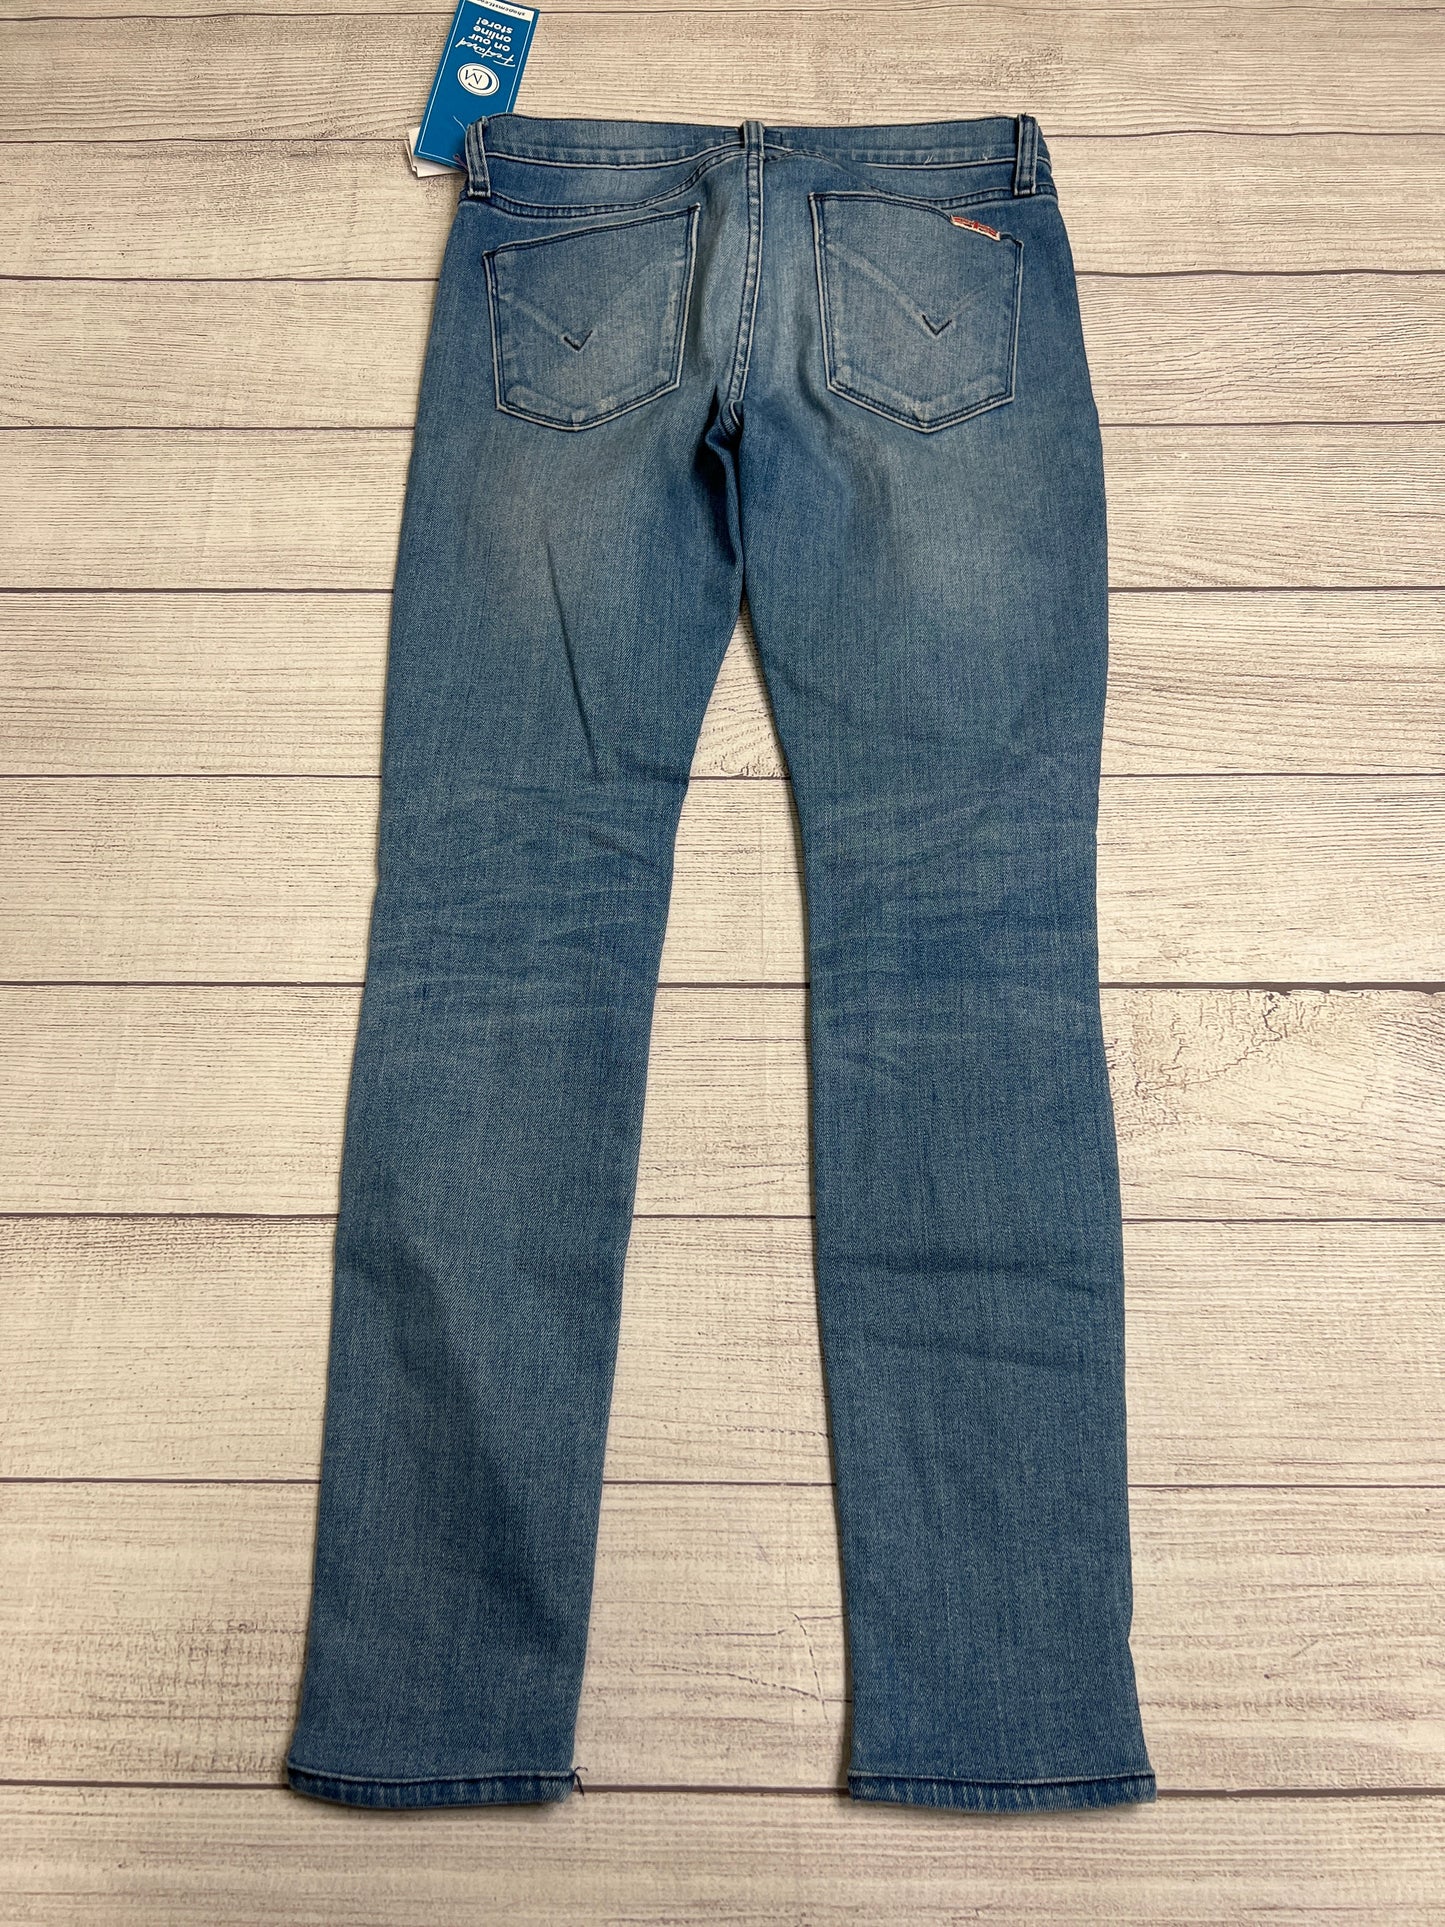 Jeans Skinny By Hudson  Size: 2/25